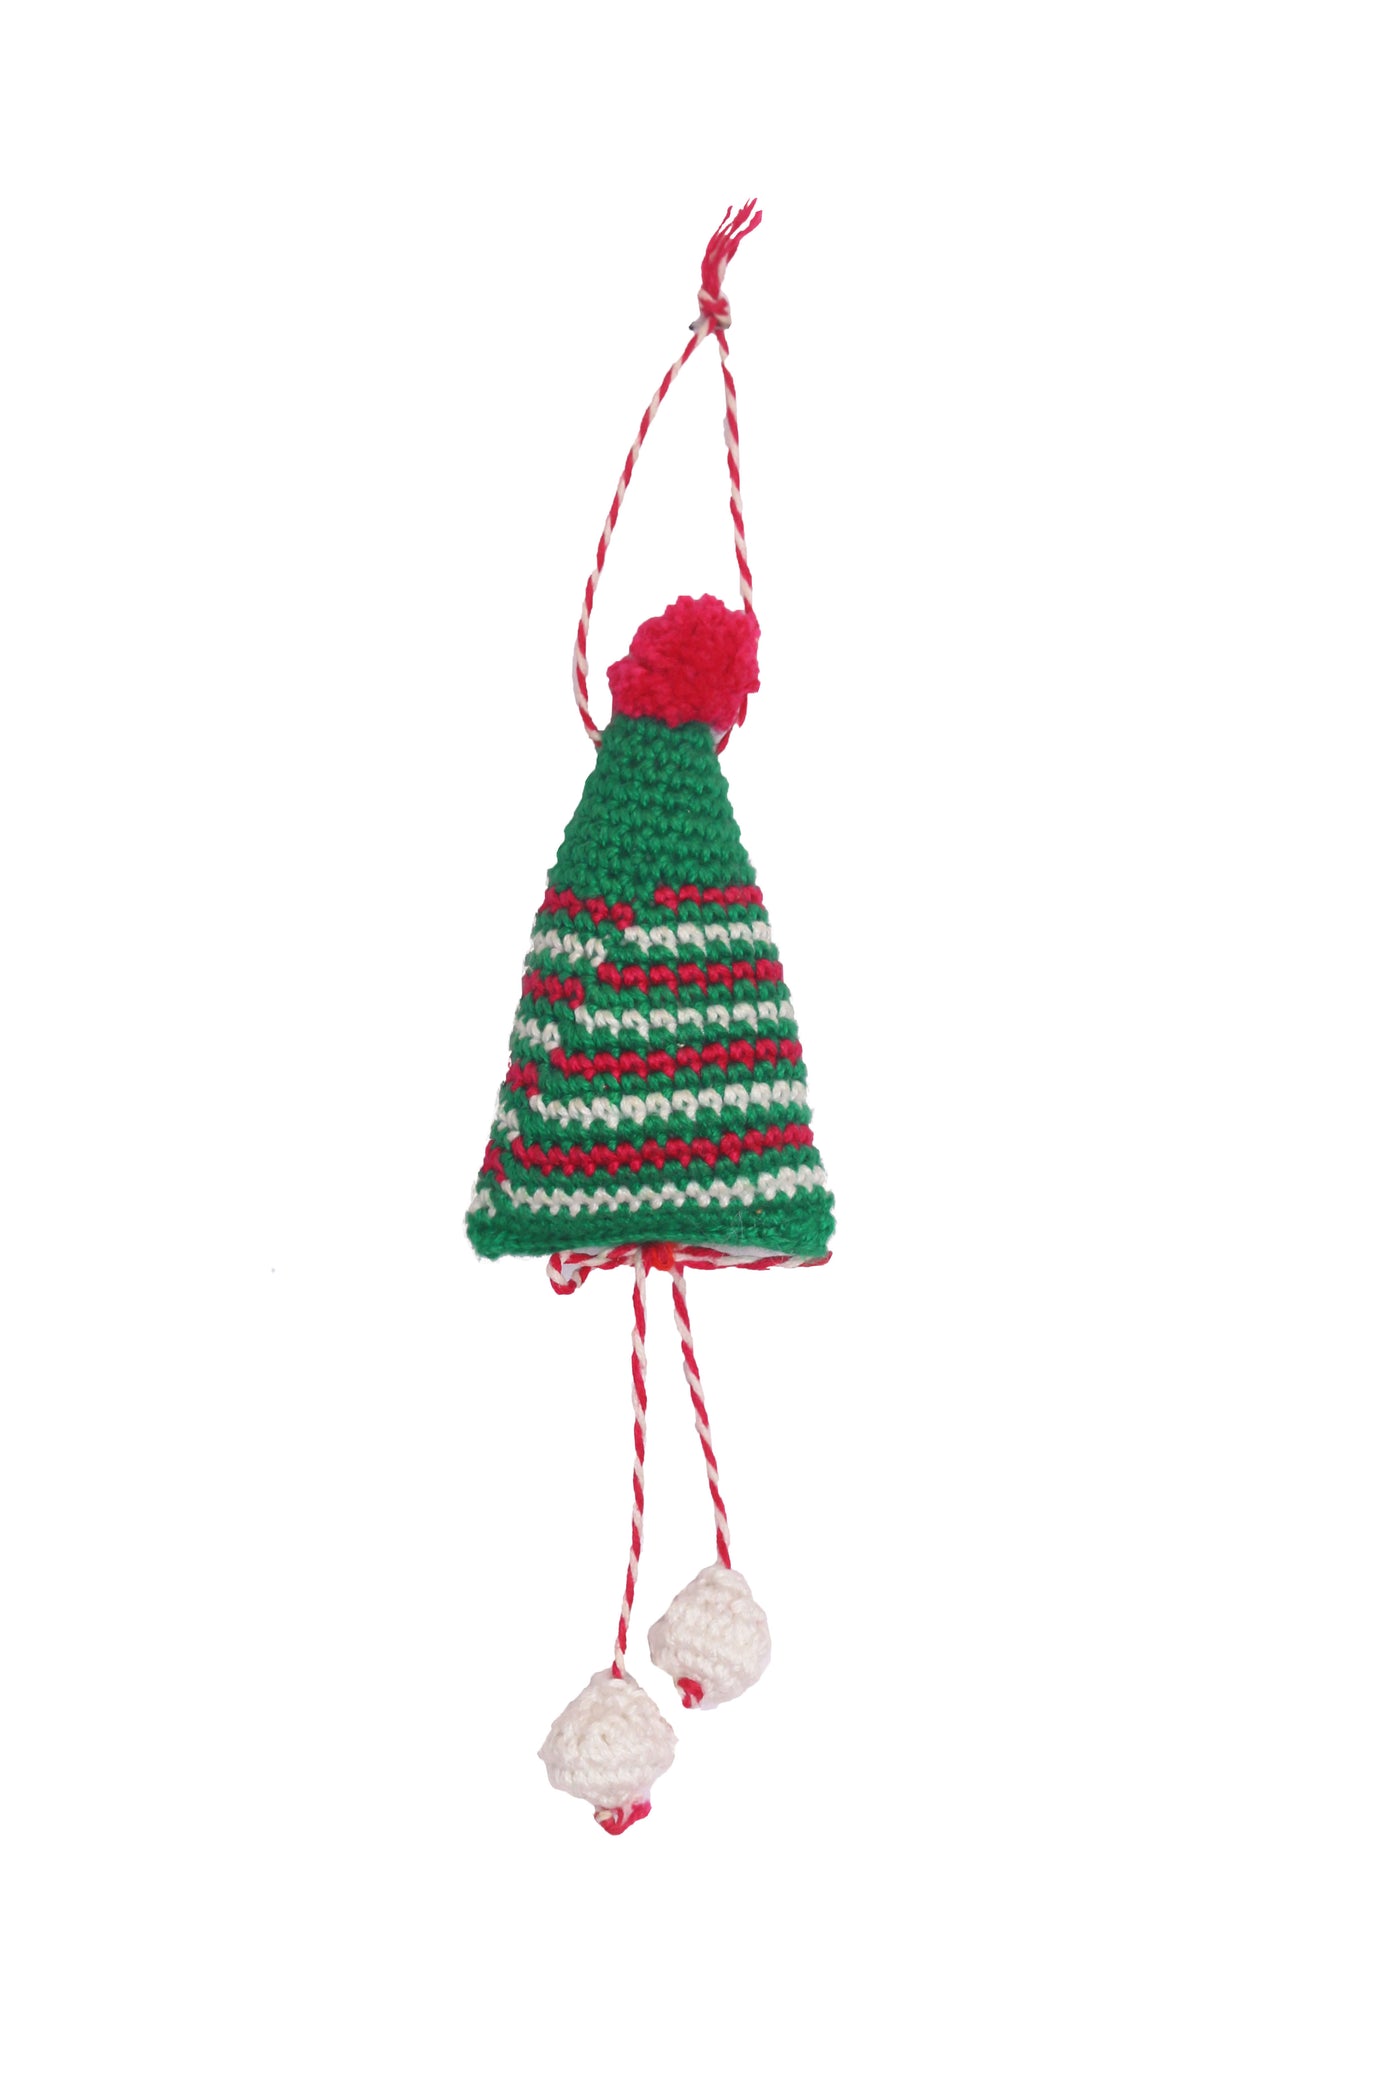 Handcrafted Amigurumi Christmas Tree Ornament-
Christmas Tree